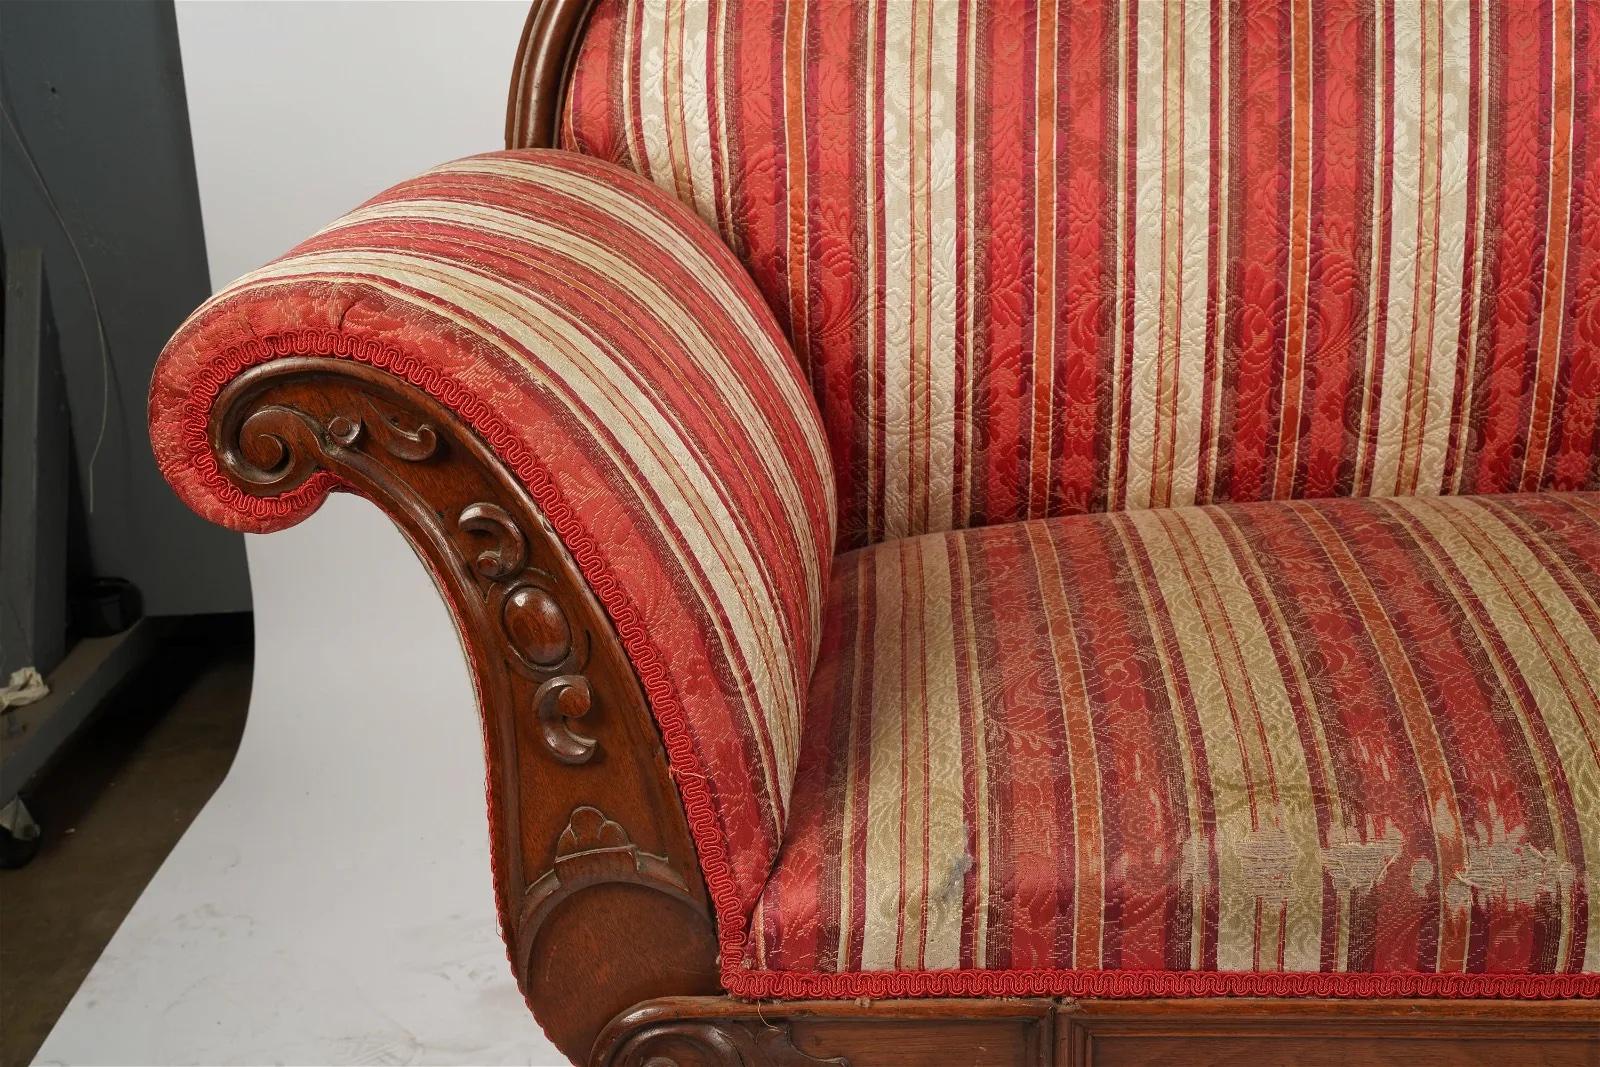 Period Antique American Victorian Rococo Revival Carved Walnut Sofa Circa 1850 In Good Condition For Sale In Los Angeles, CA